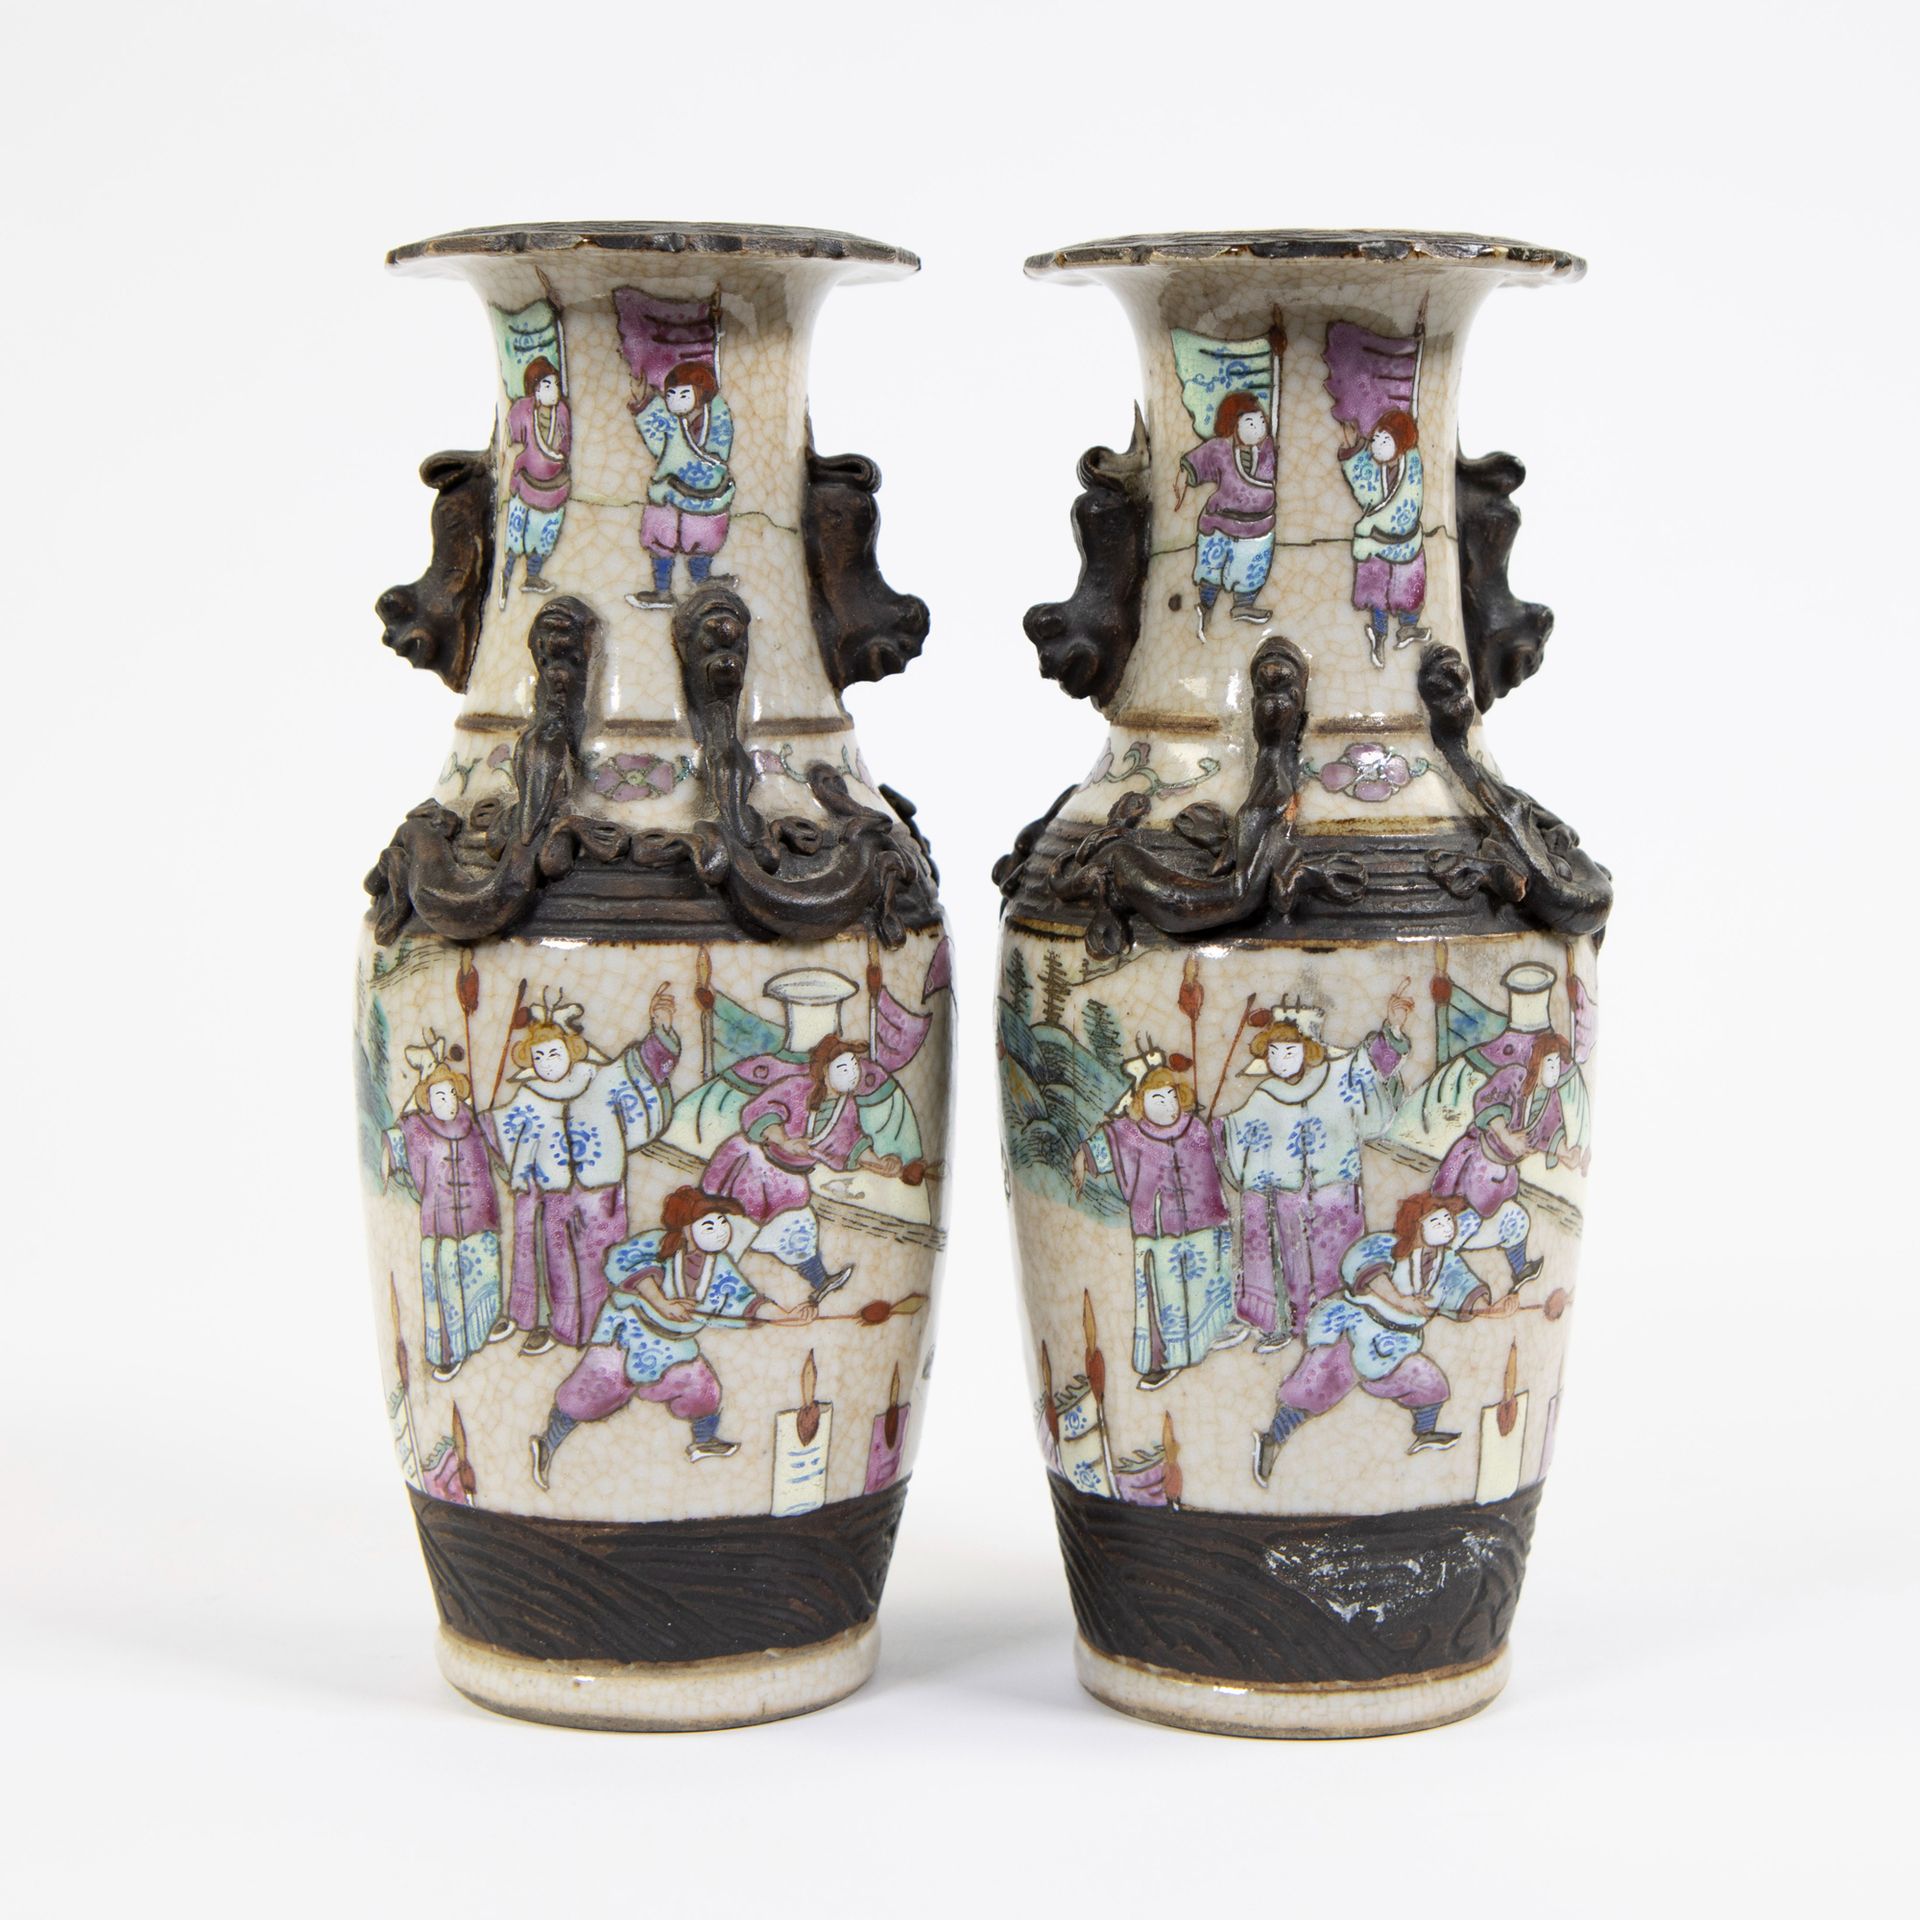 Null 收藏2个中国南金花瓶，约1900年
Lot van 2 Chinese Nankin vaasjes, ca 1900
H 20.5 cm